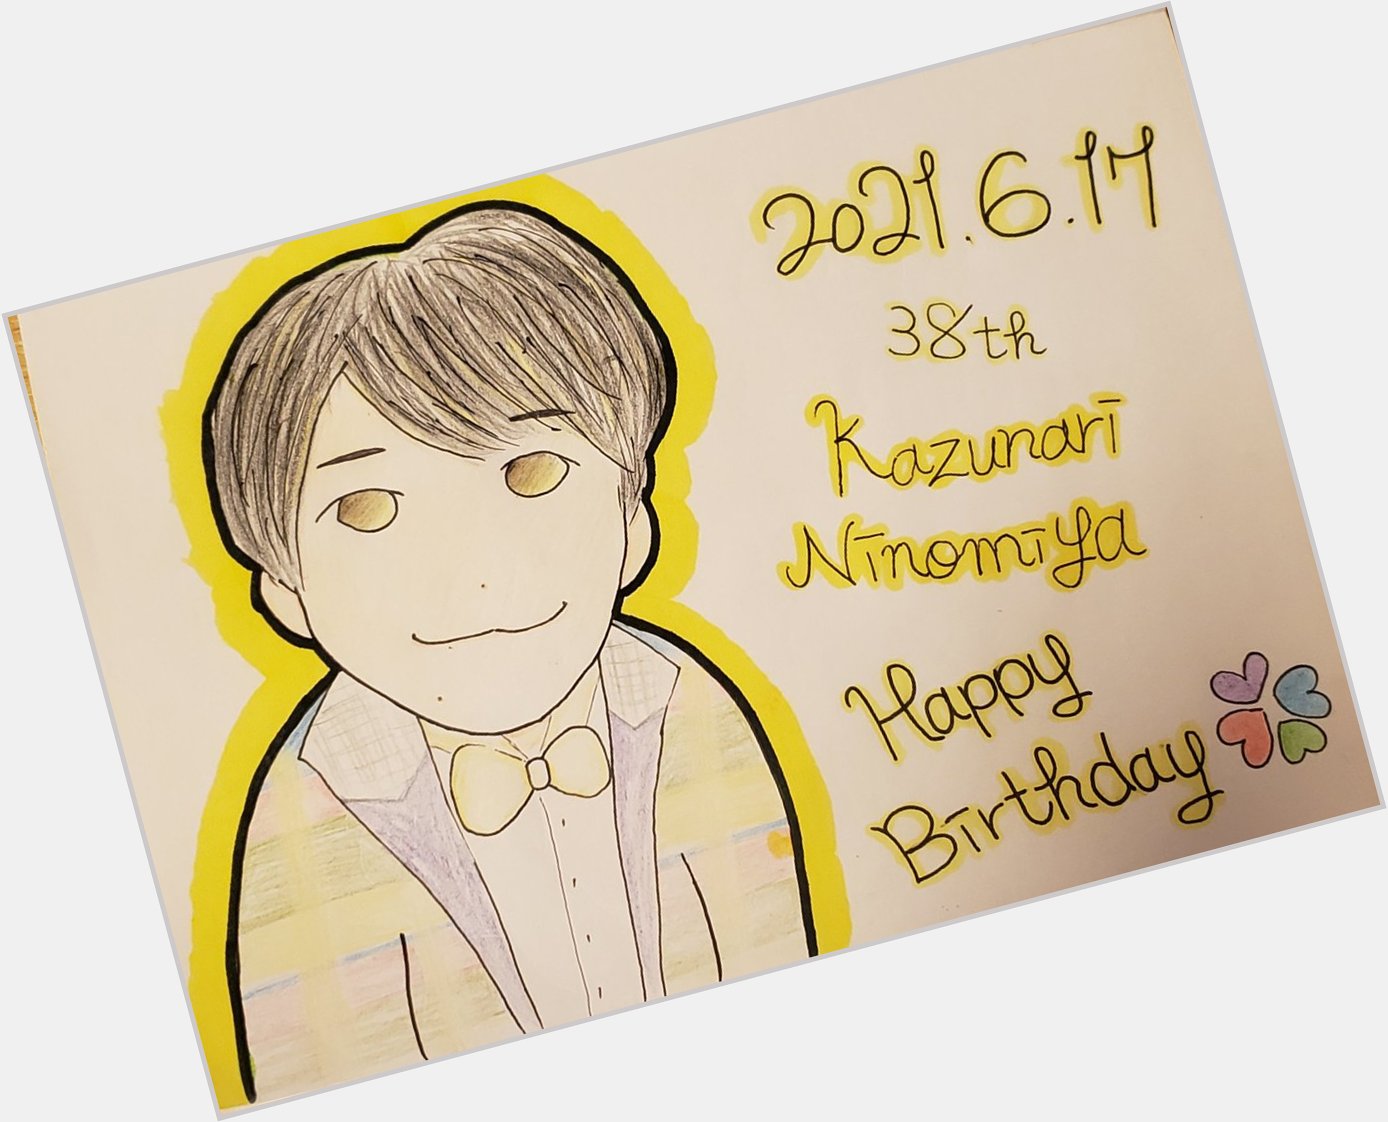 Dear Kazunari Ninomiya
Happy Birthday to you    